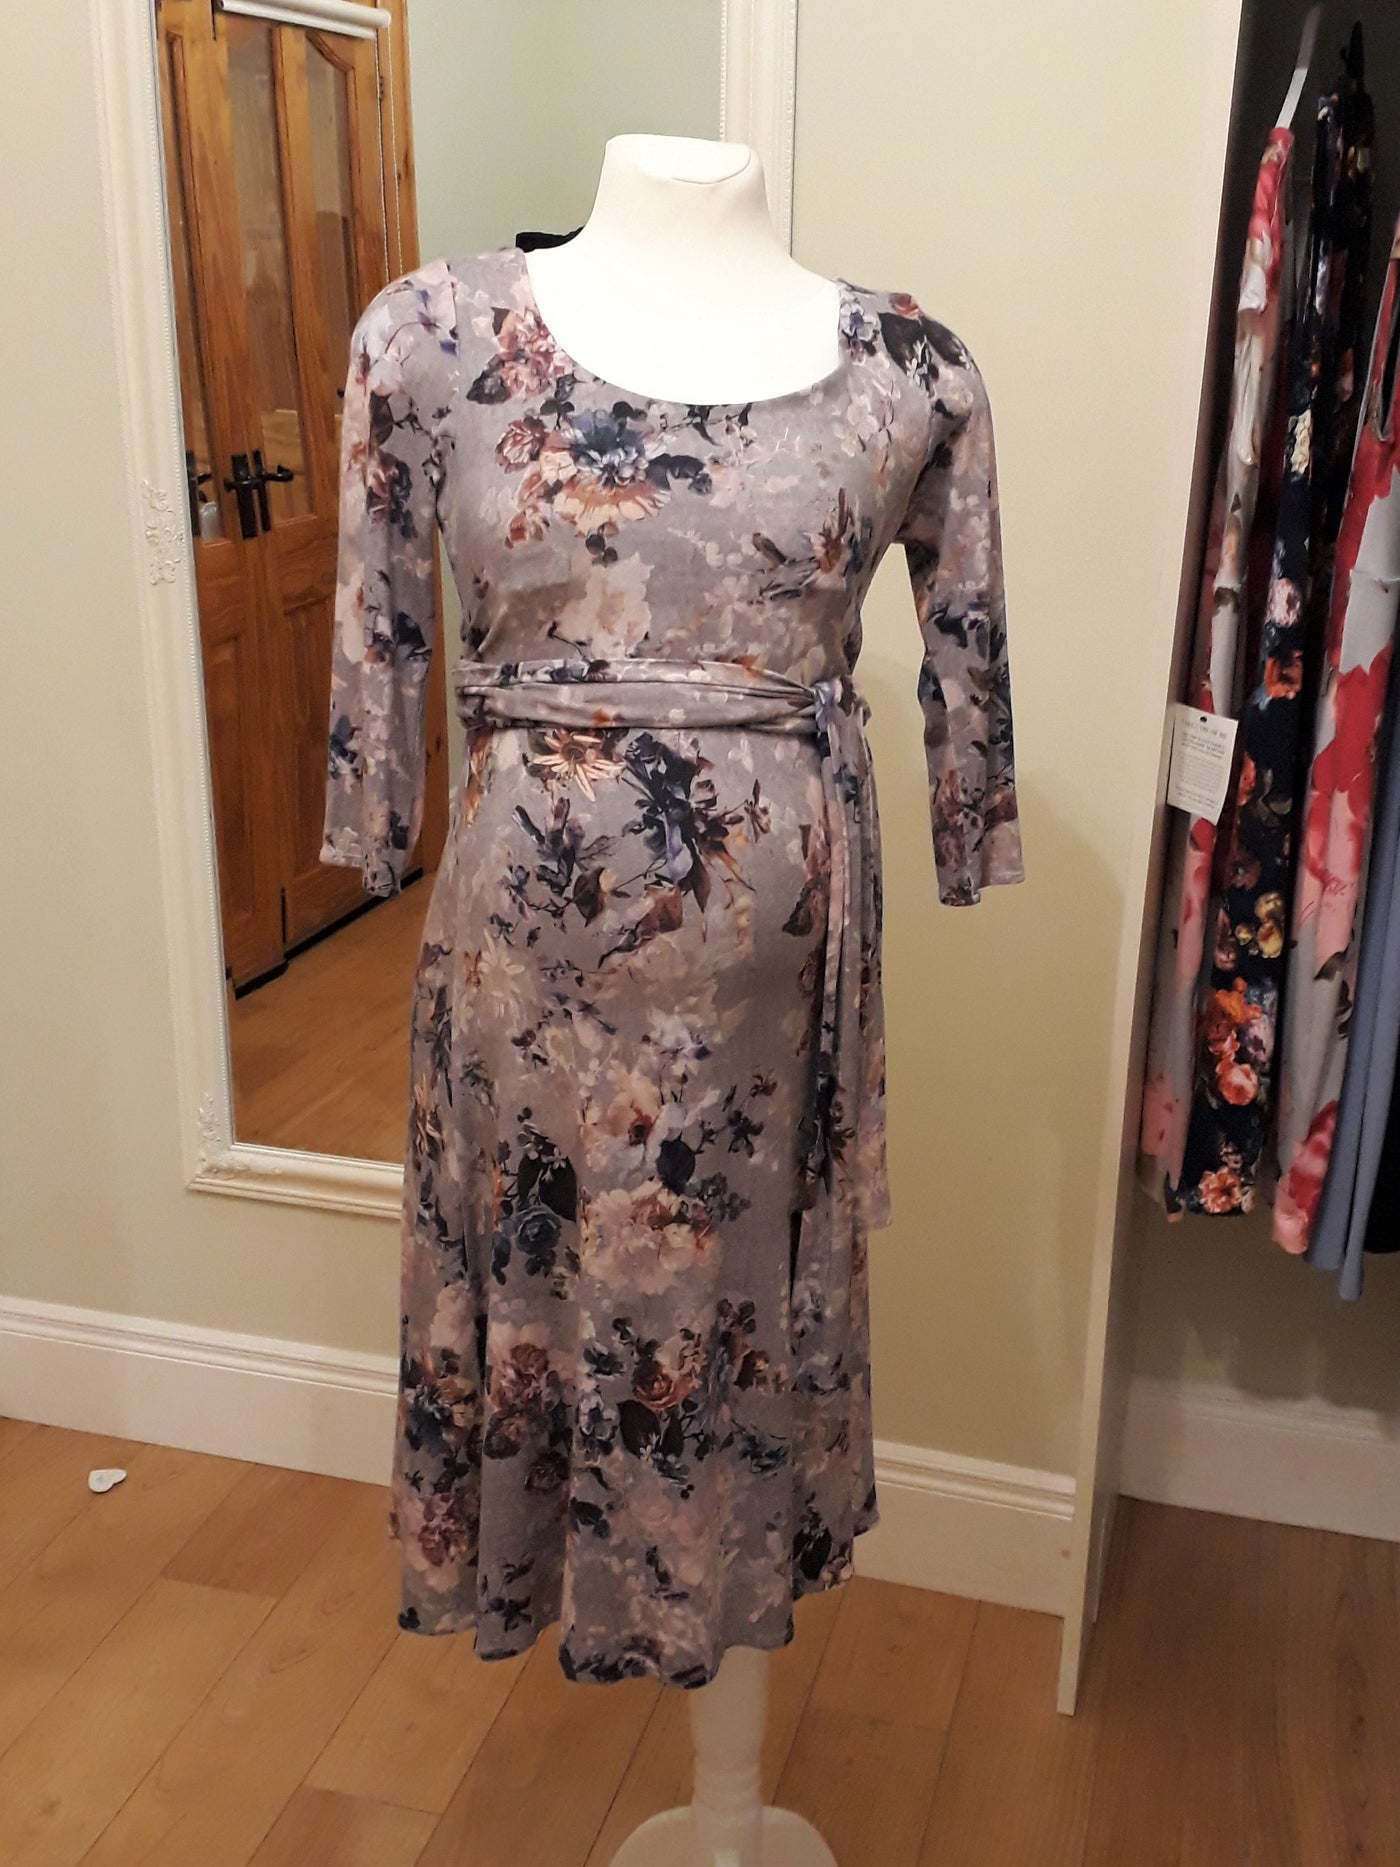 Tiffany Rose Naomi nursing dress in Vintage Bloom - Size 2 (UK 10/12)